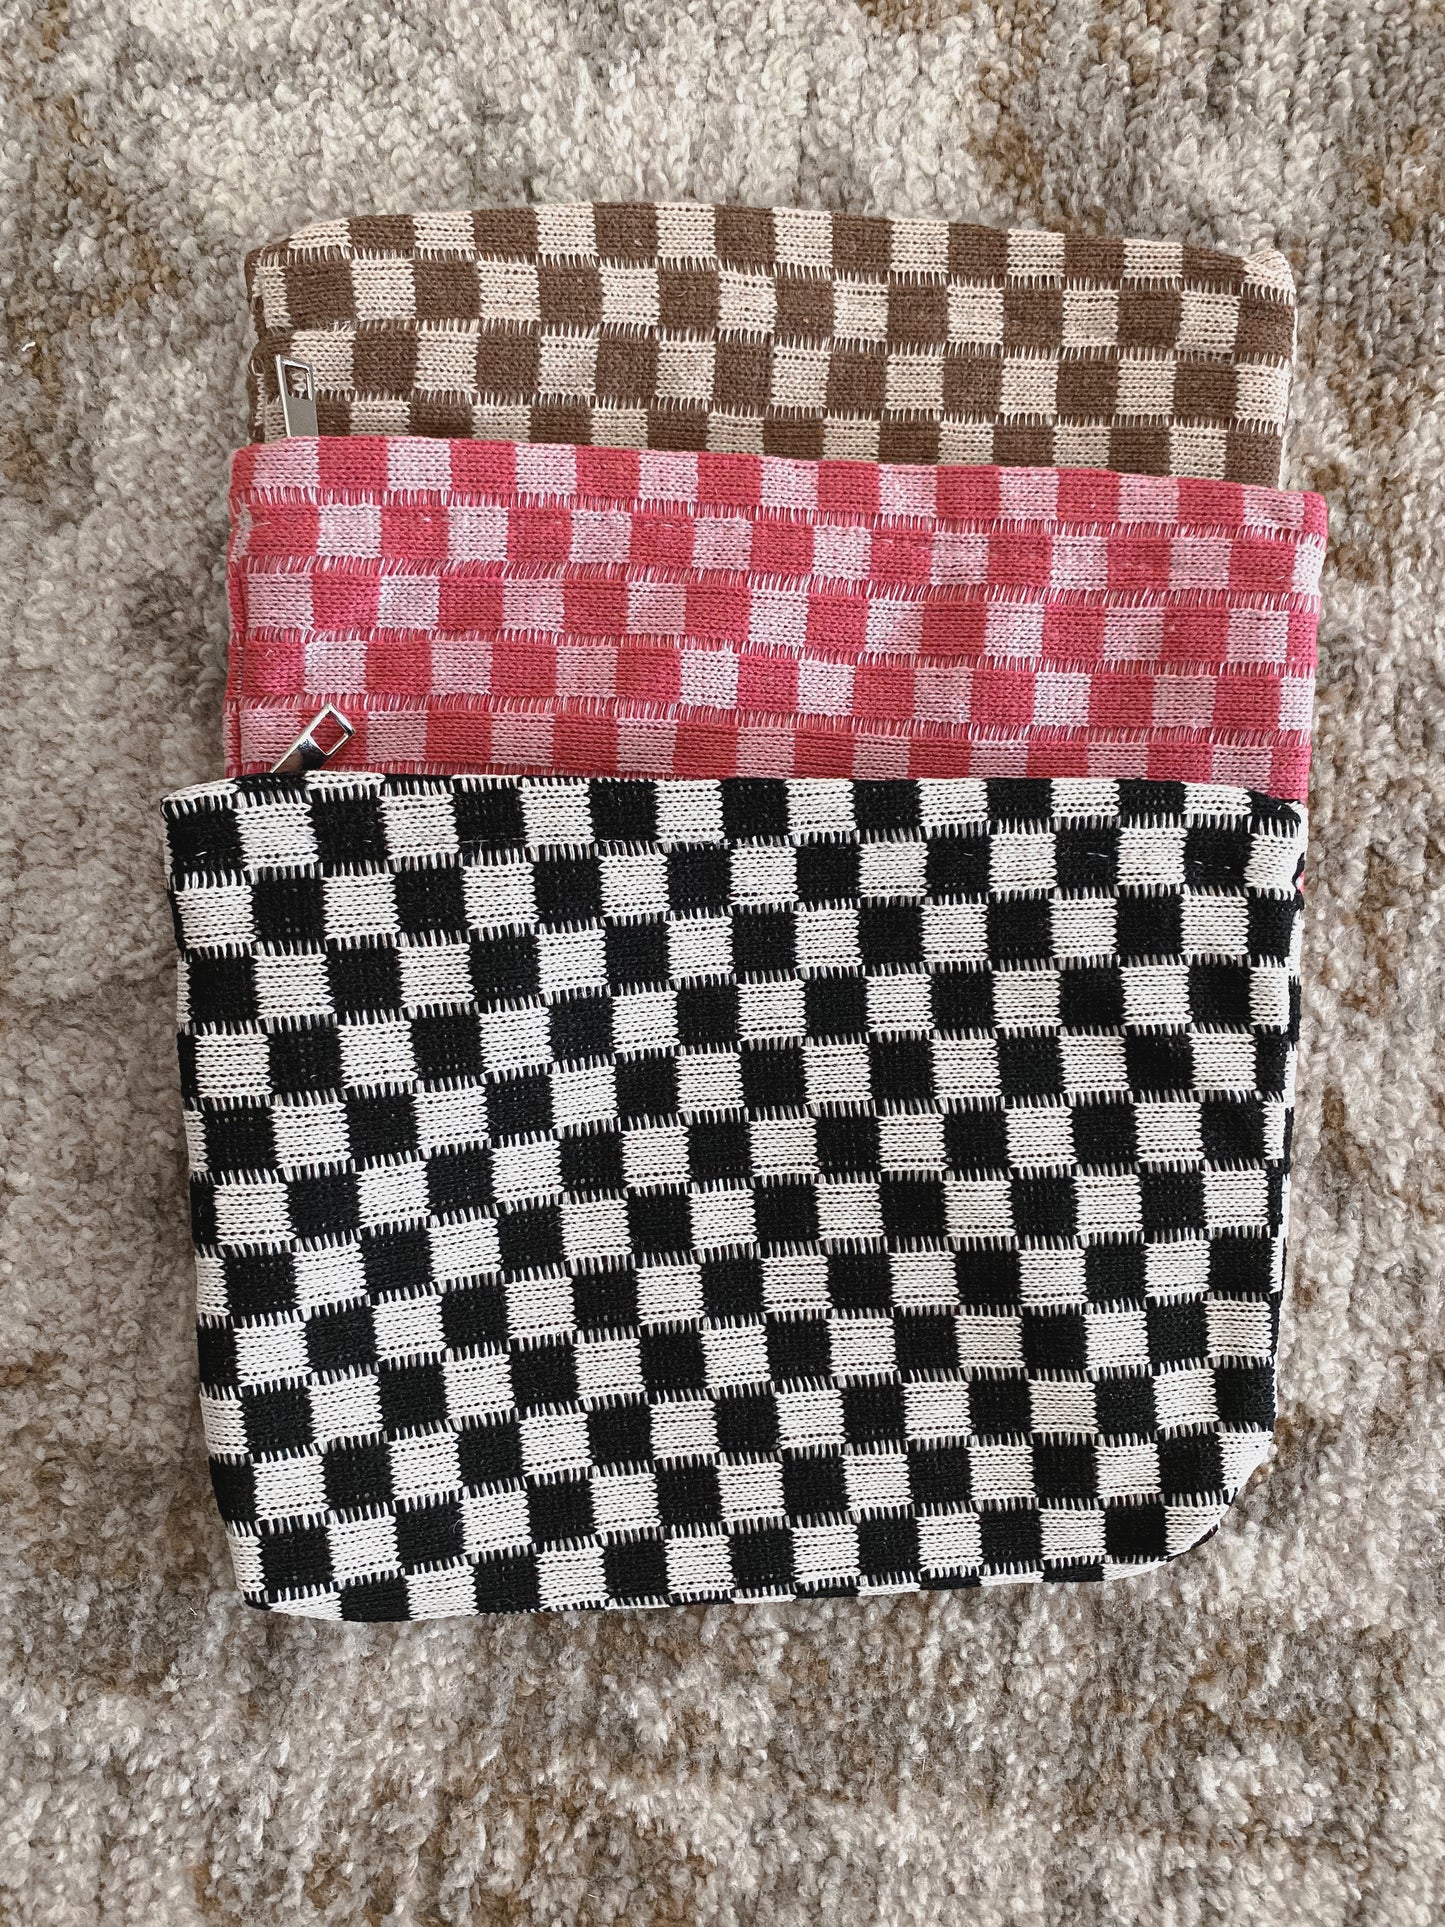 Checkered Makeup Bag